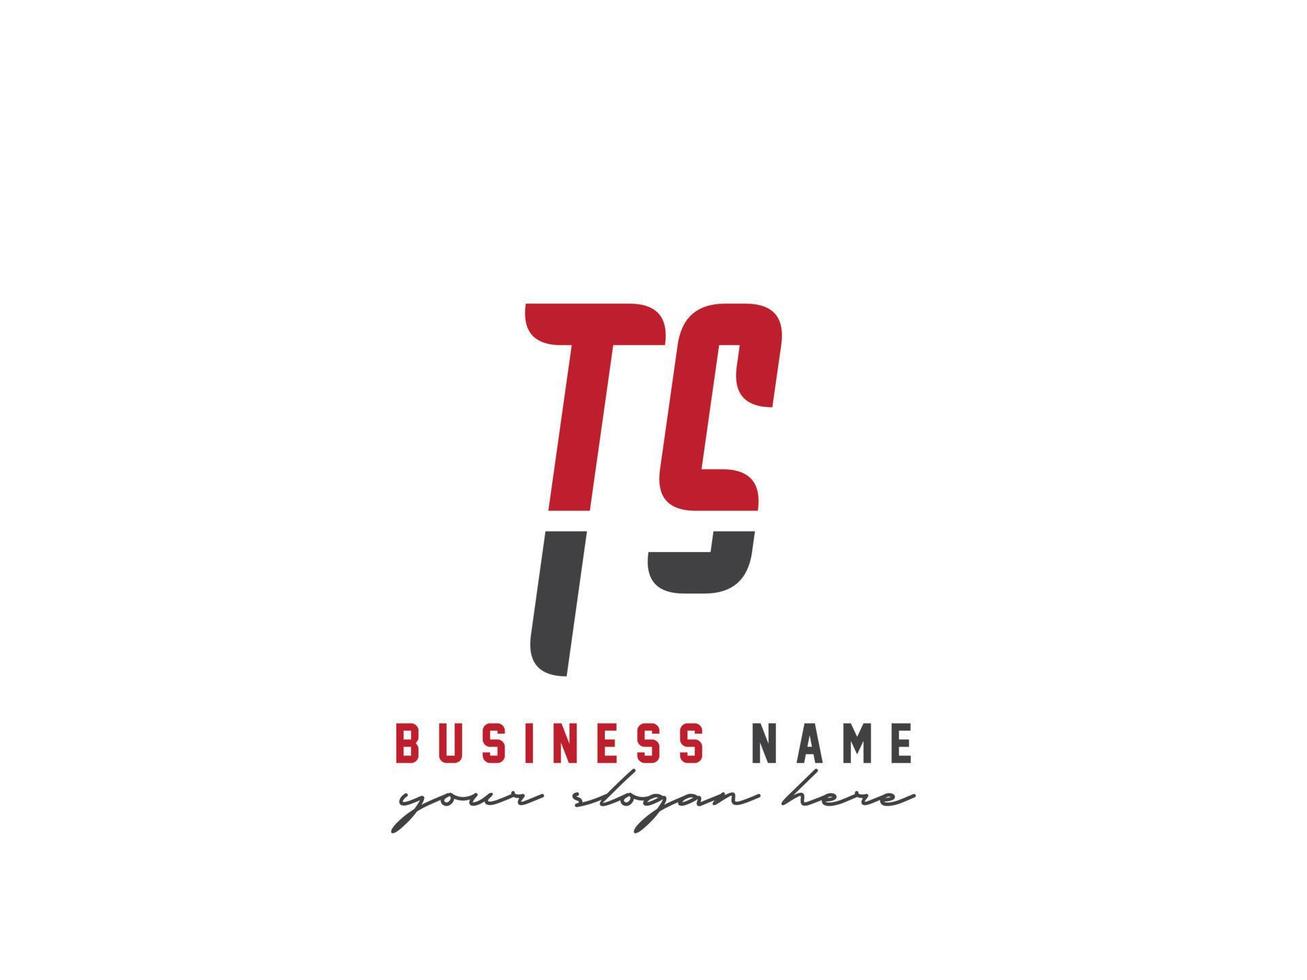 bunt ts Logo Symbol, minimalistisch ts Logo Brief Design vektor